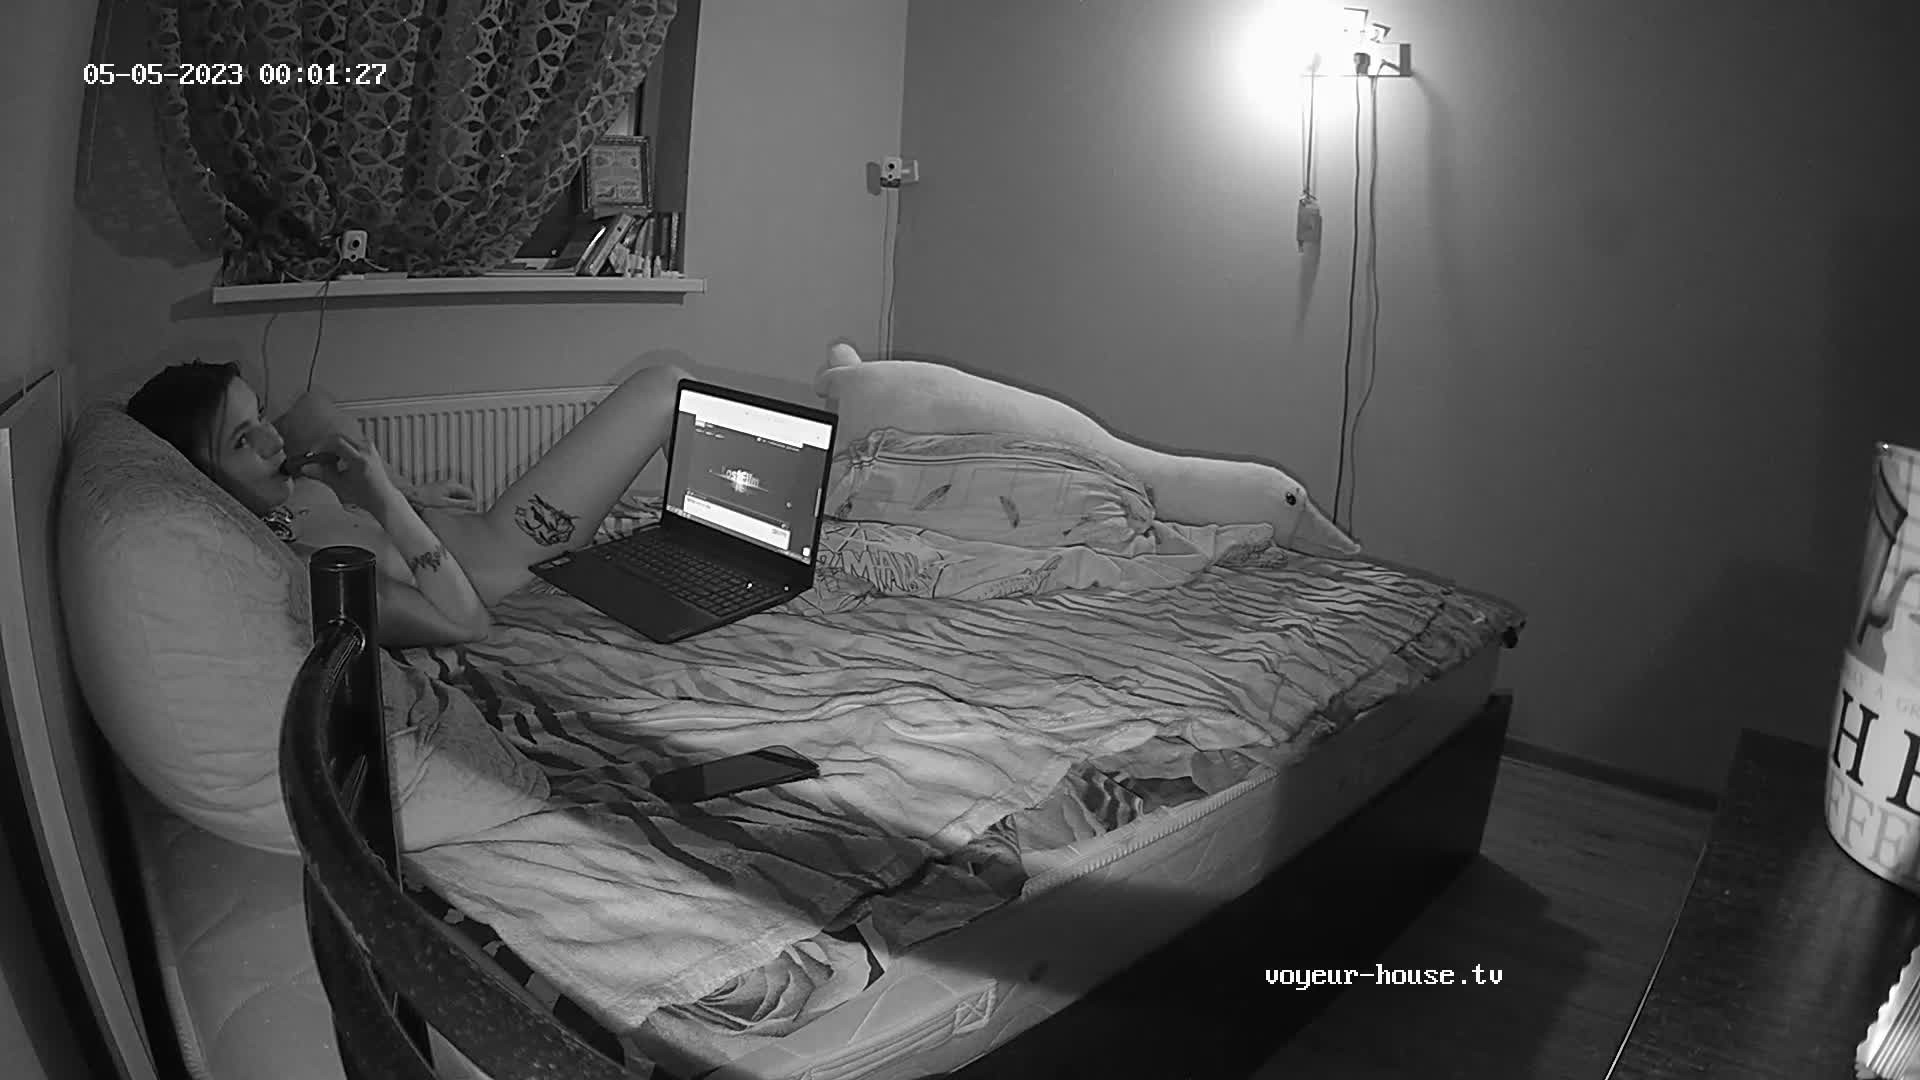 Toriana bedroom bate, May-04-2023